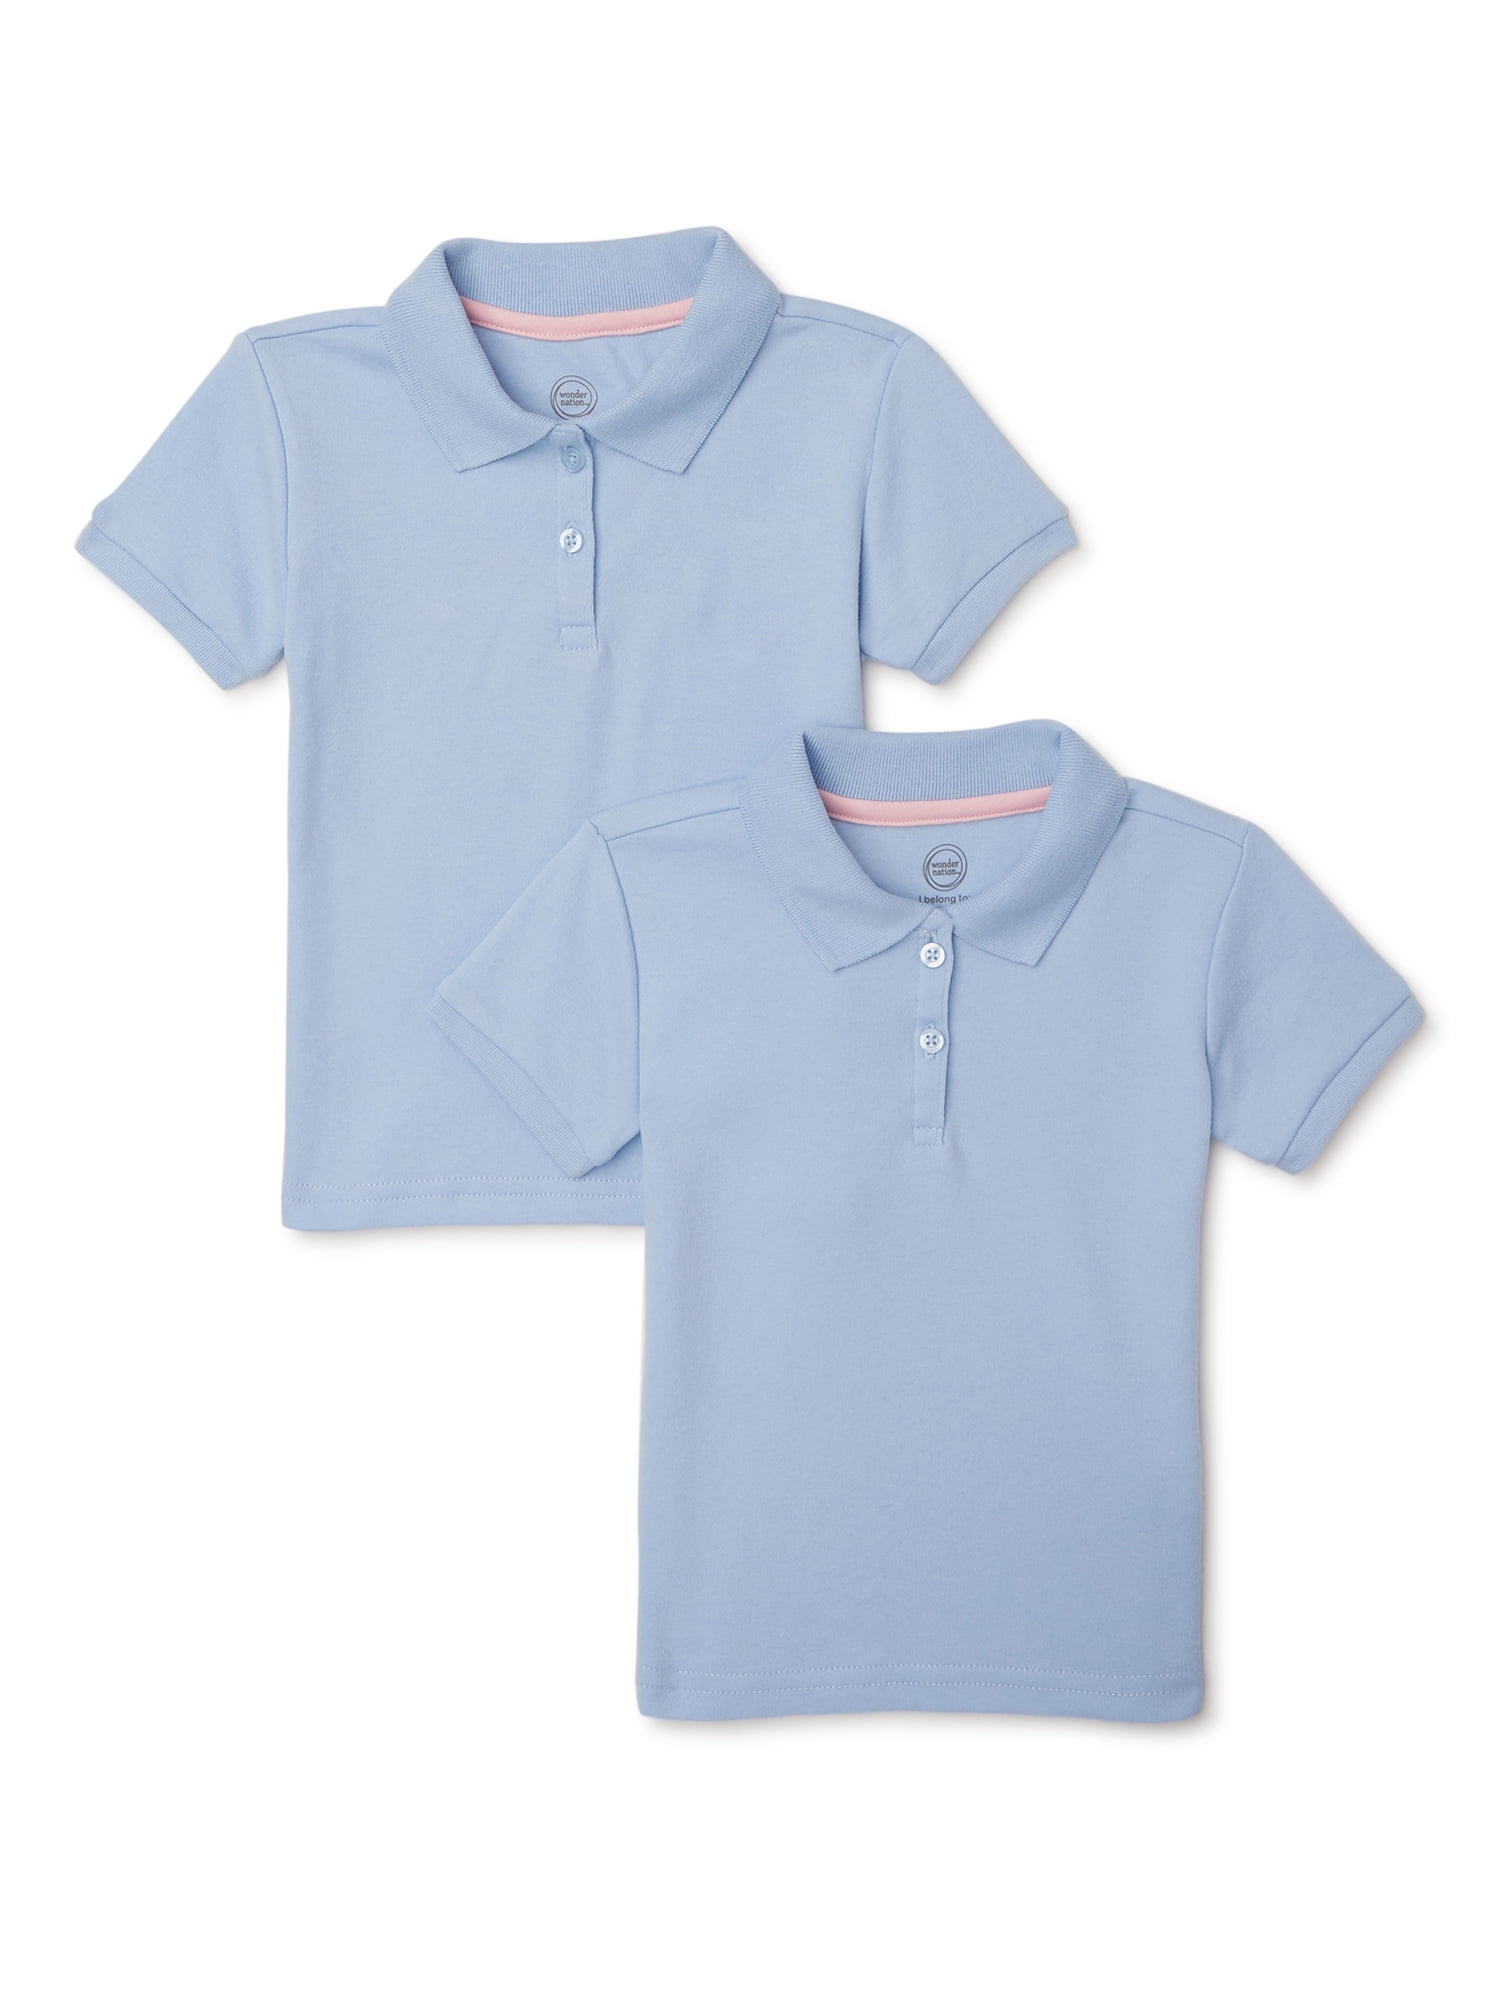 Essentials Girls and Toddlers' Uniform Short-Sleeve Interlock Polo Shirt Multipacks 